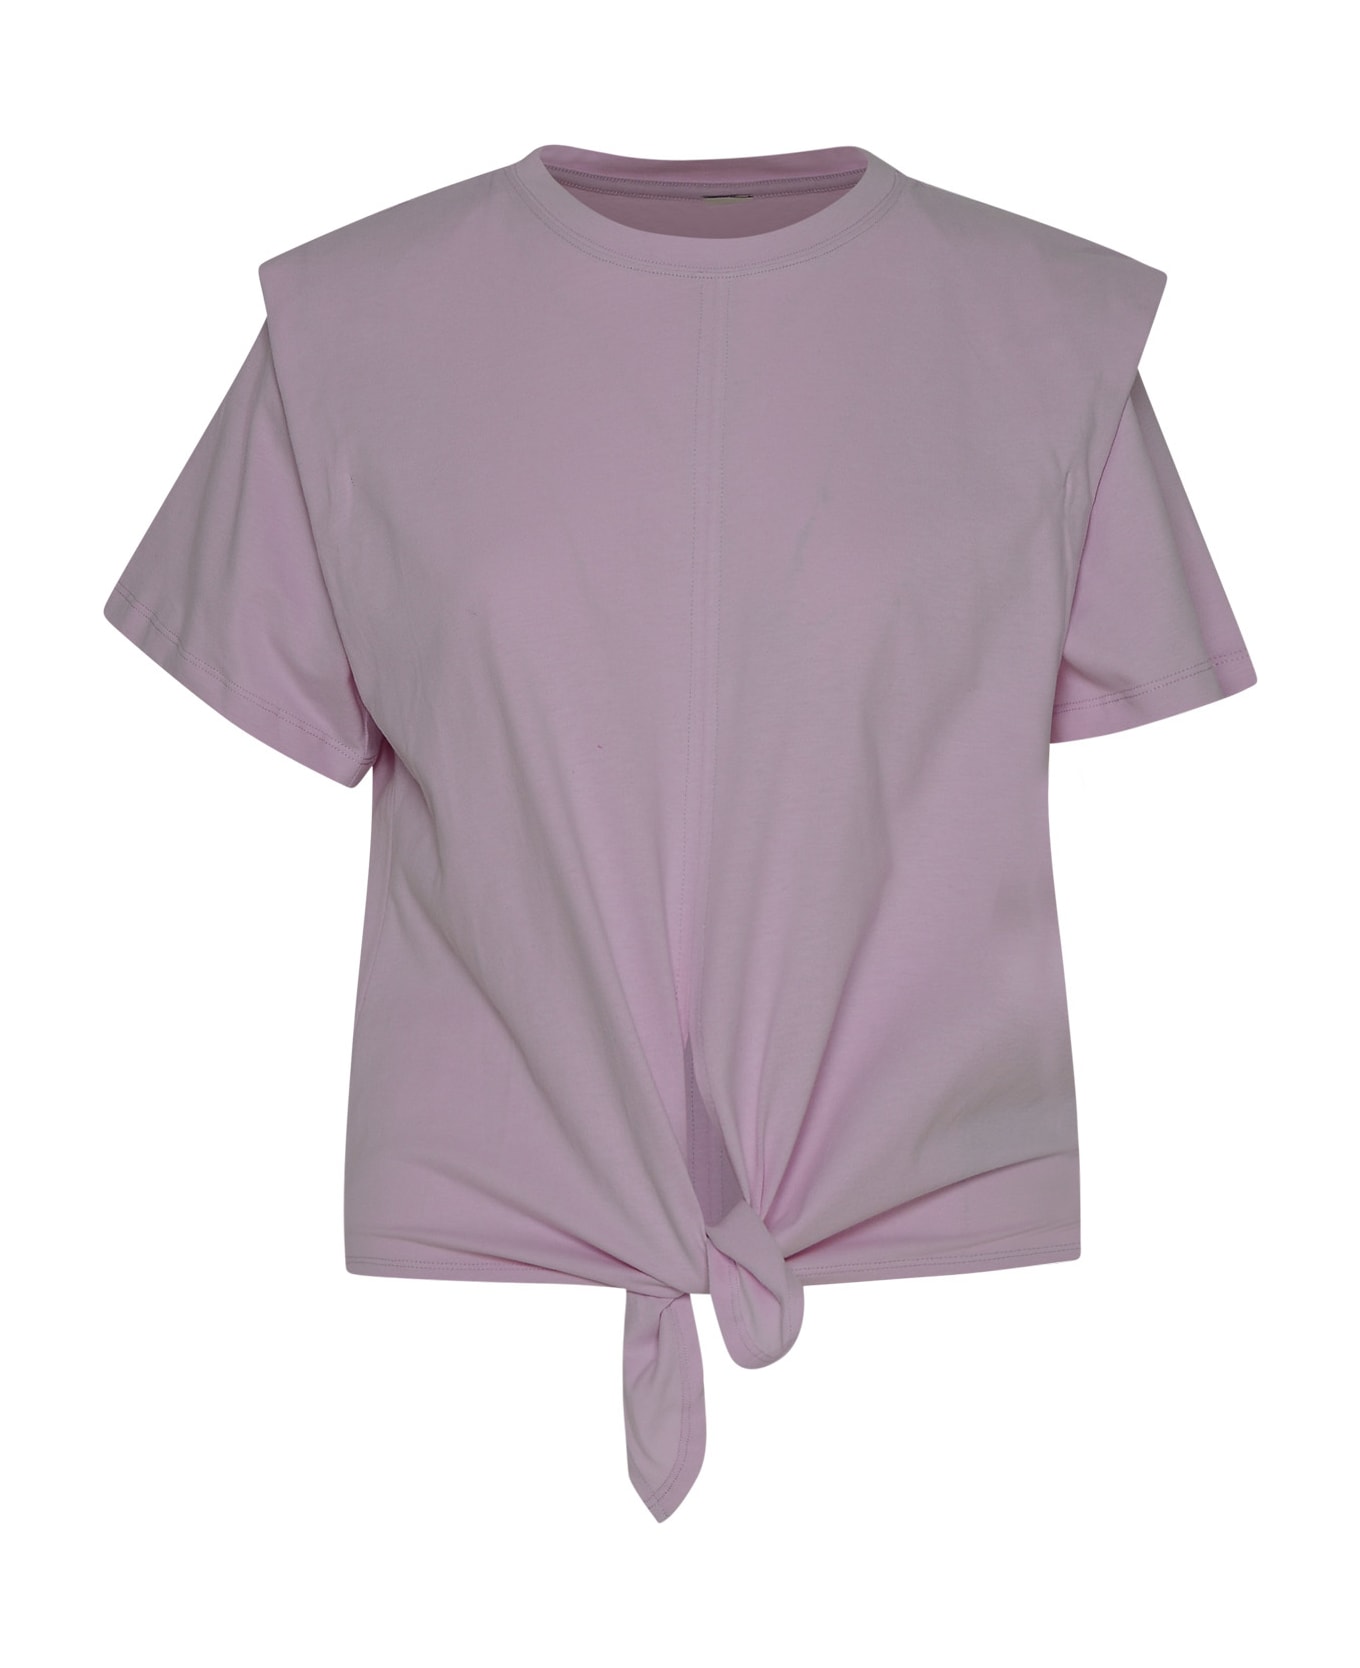 Isabel Marant Zelikia T-shirt - Light pink Tシャツ